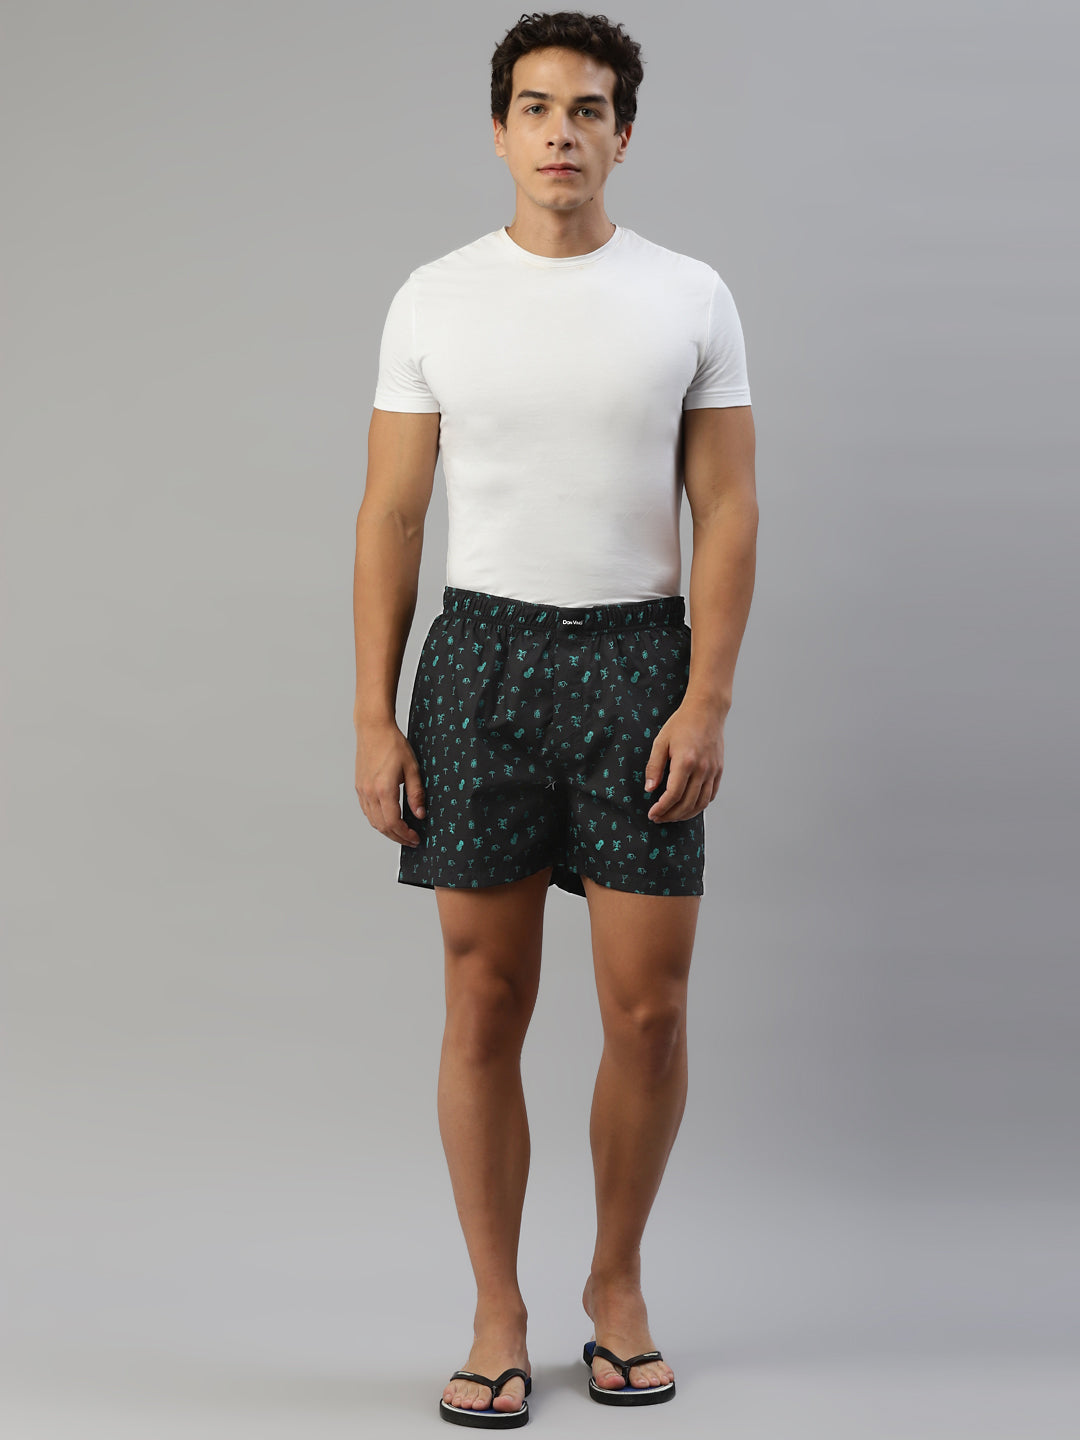 Don Vino Men's Printed Black Cotton Boxer Shorts